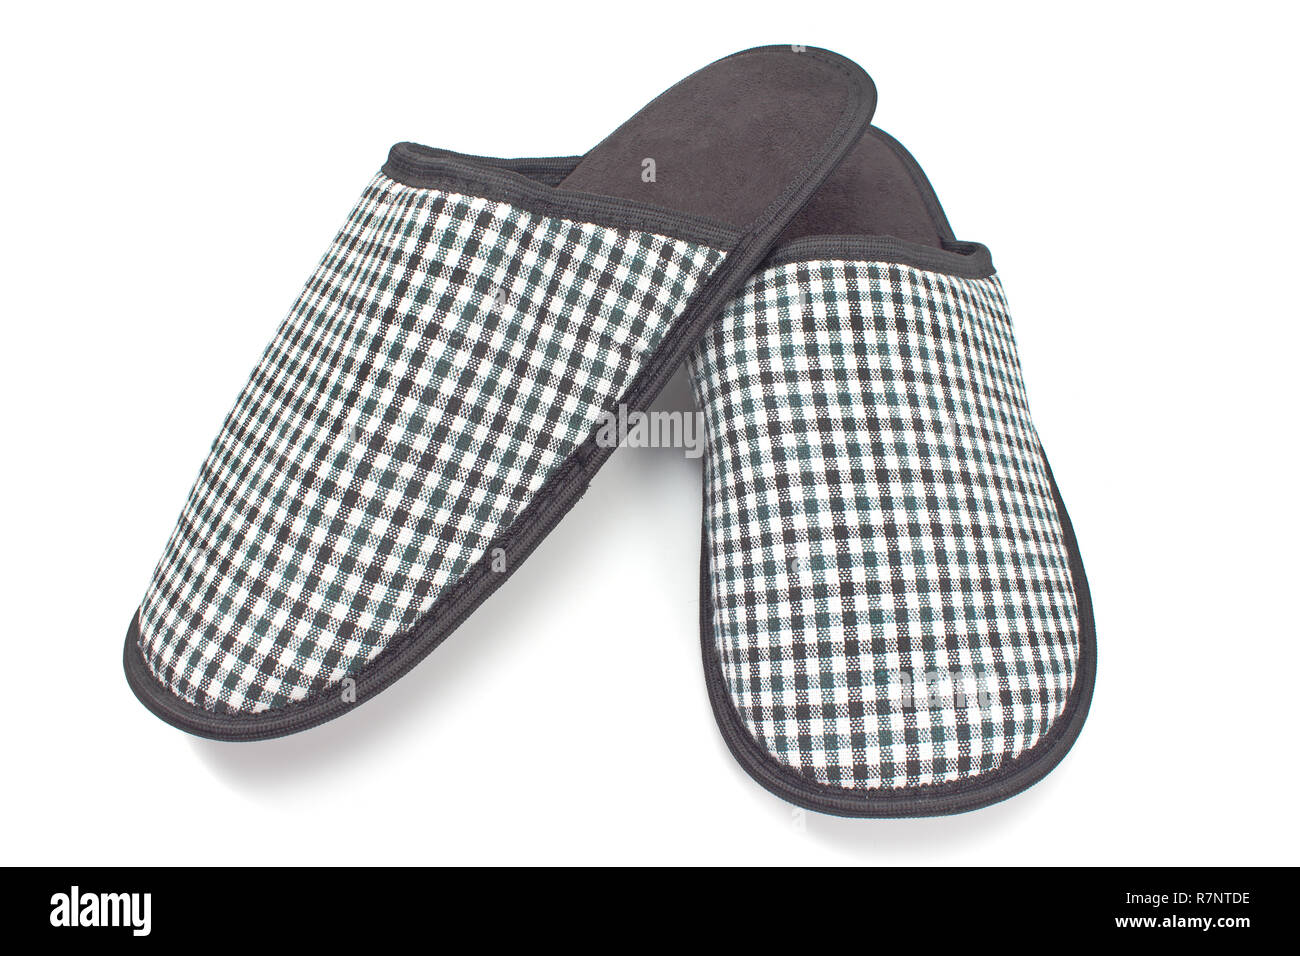 House slippers isolated on white background Stock Photo